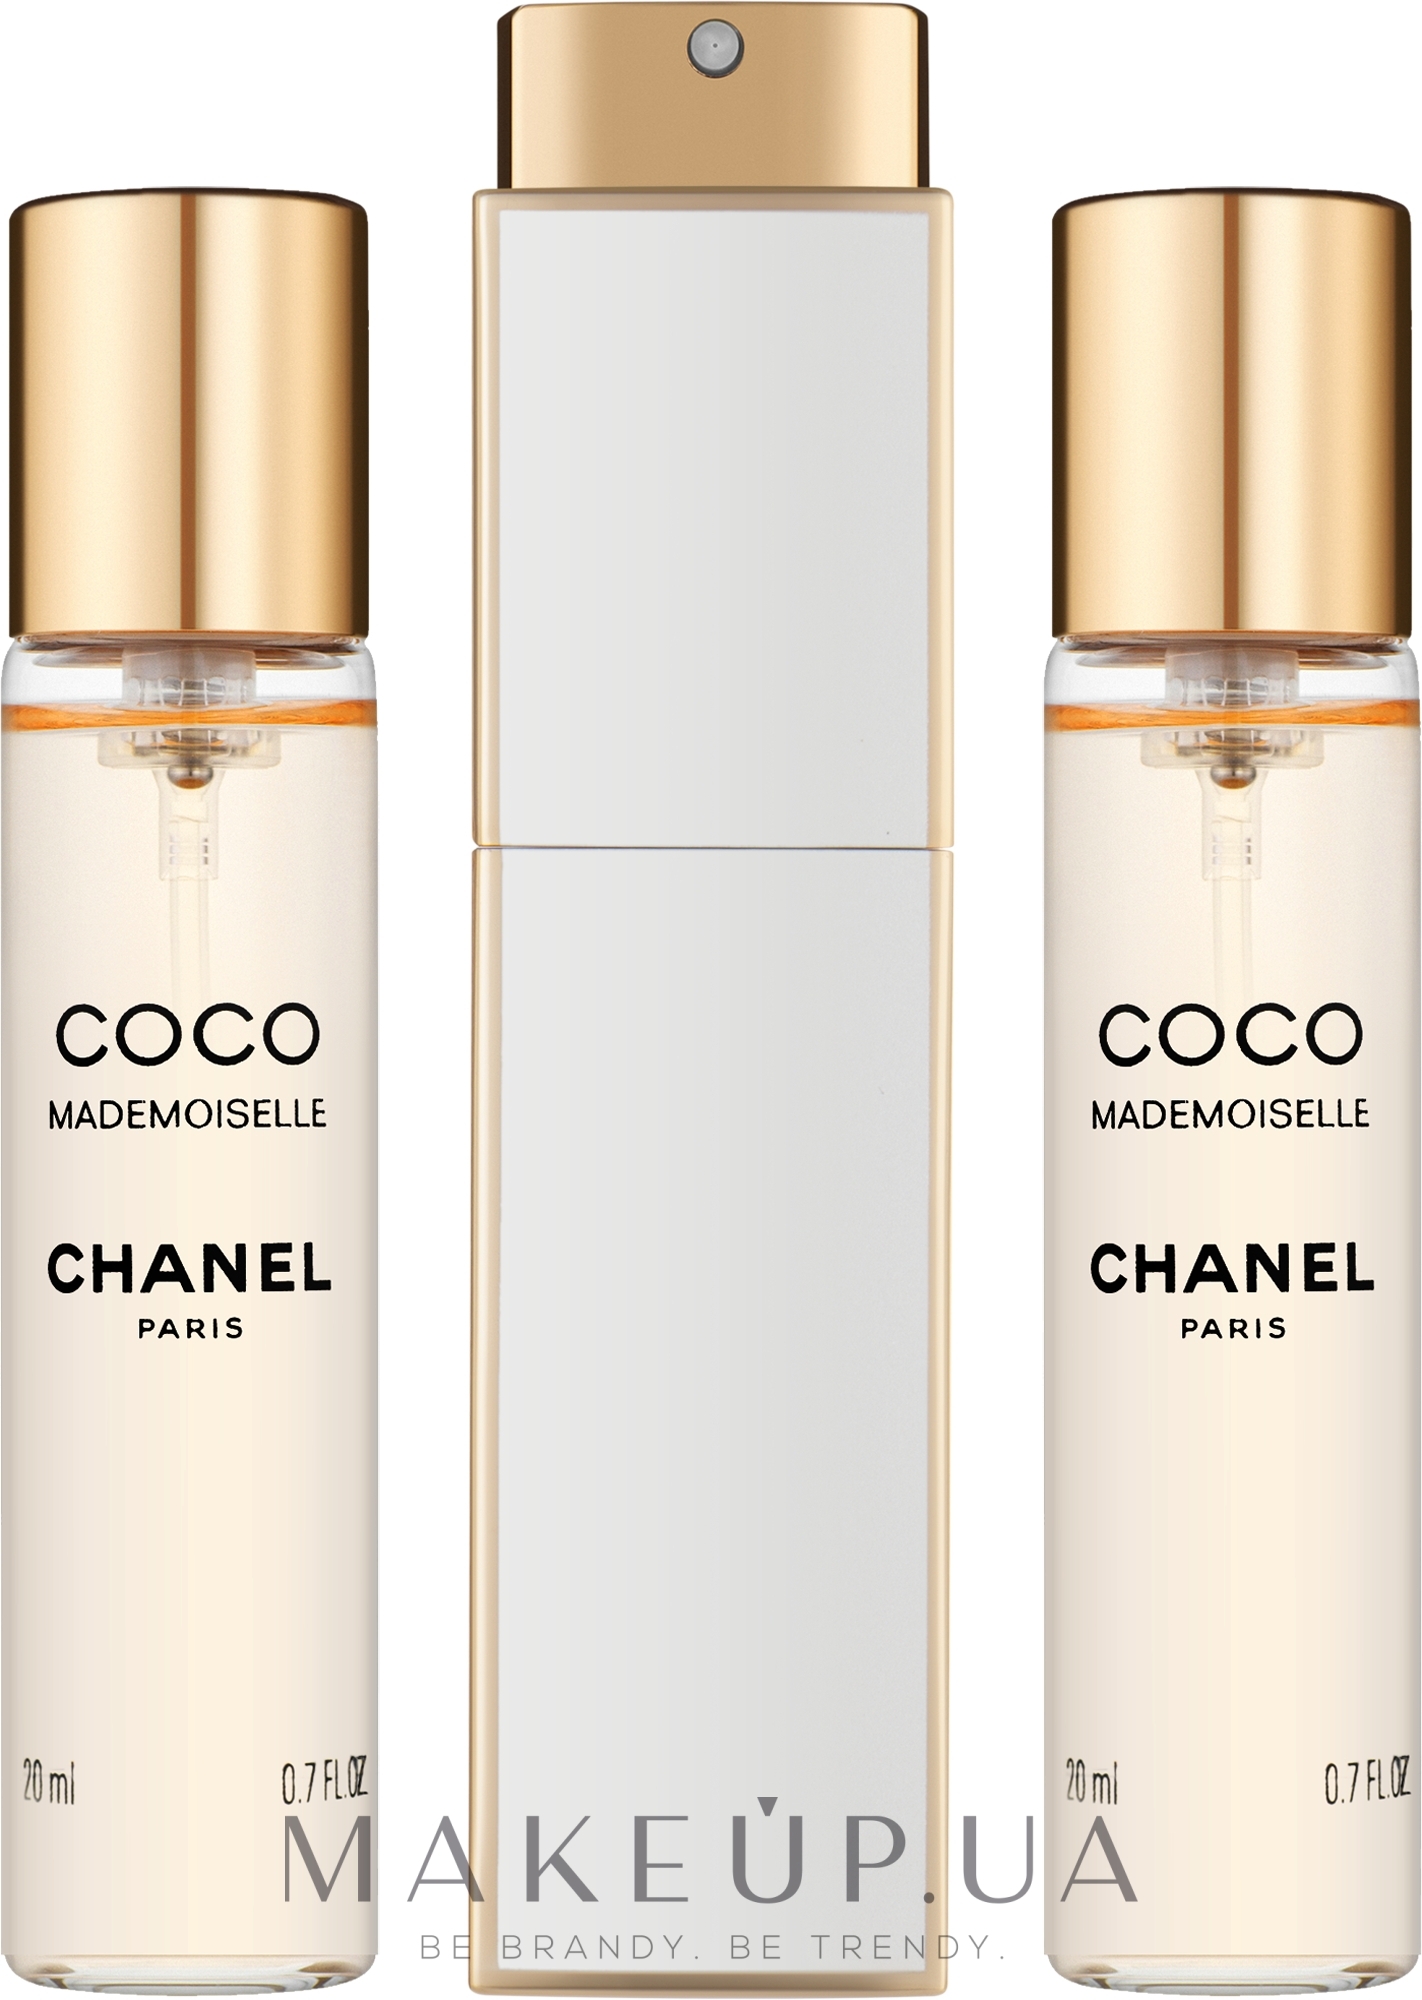 Chanel Coco Mademoiselle - Парфюмированная вода ( + 2 сменных блока) — фото 3x20ml